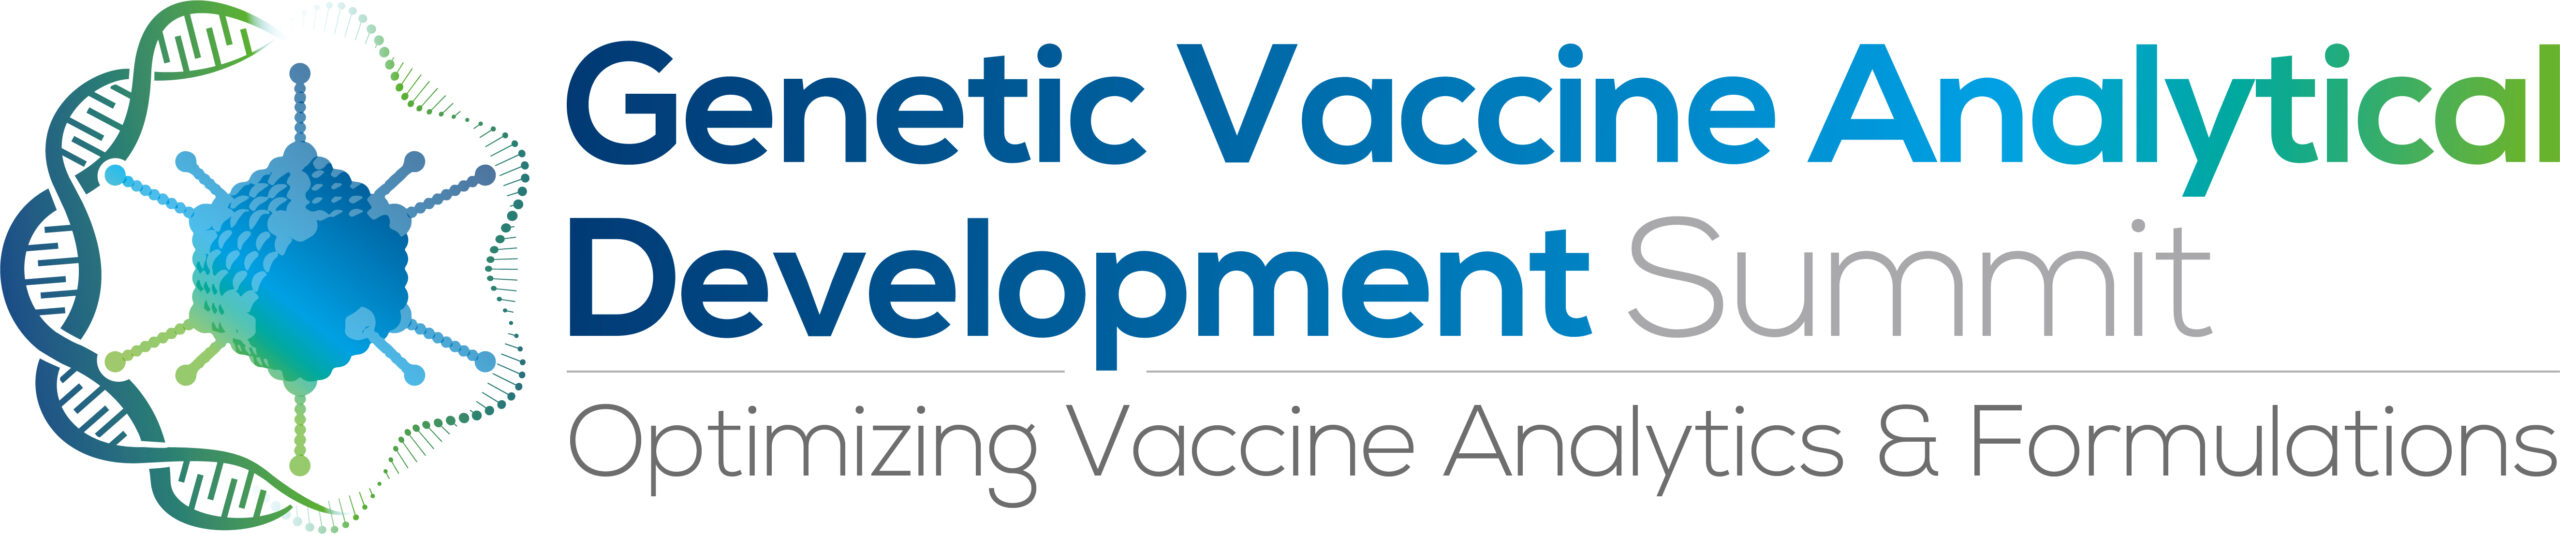 HW210927 Genetic Vaccine Analytical Development Summit logo